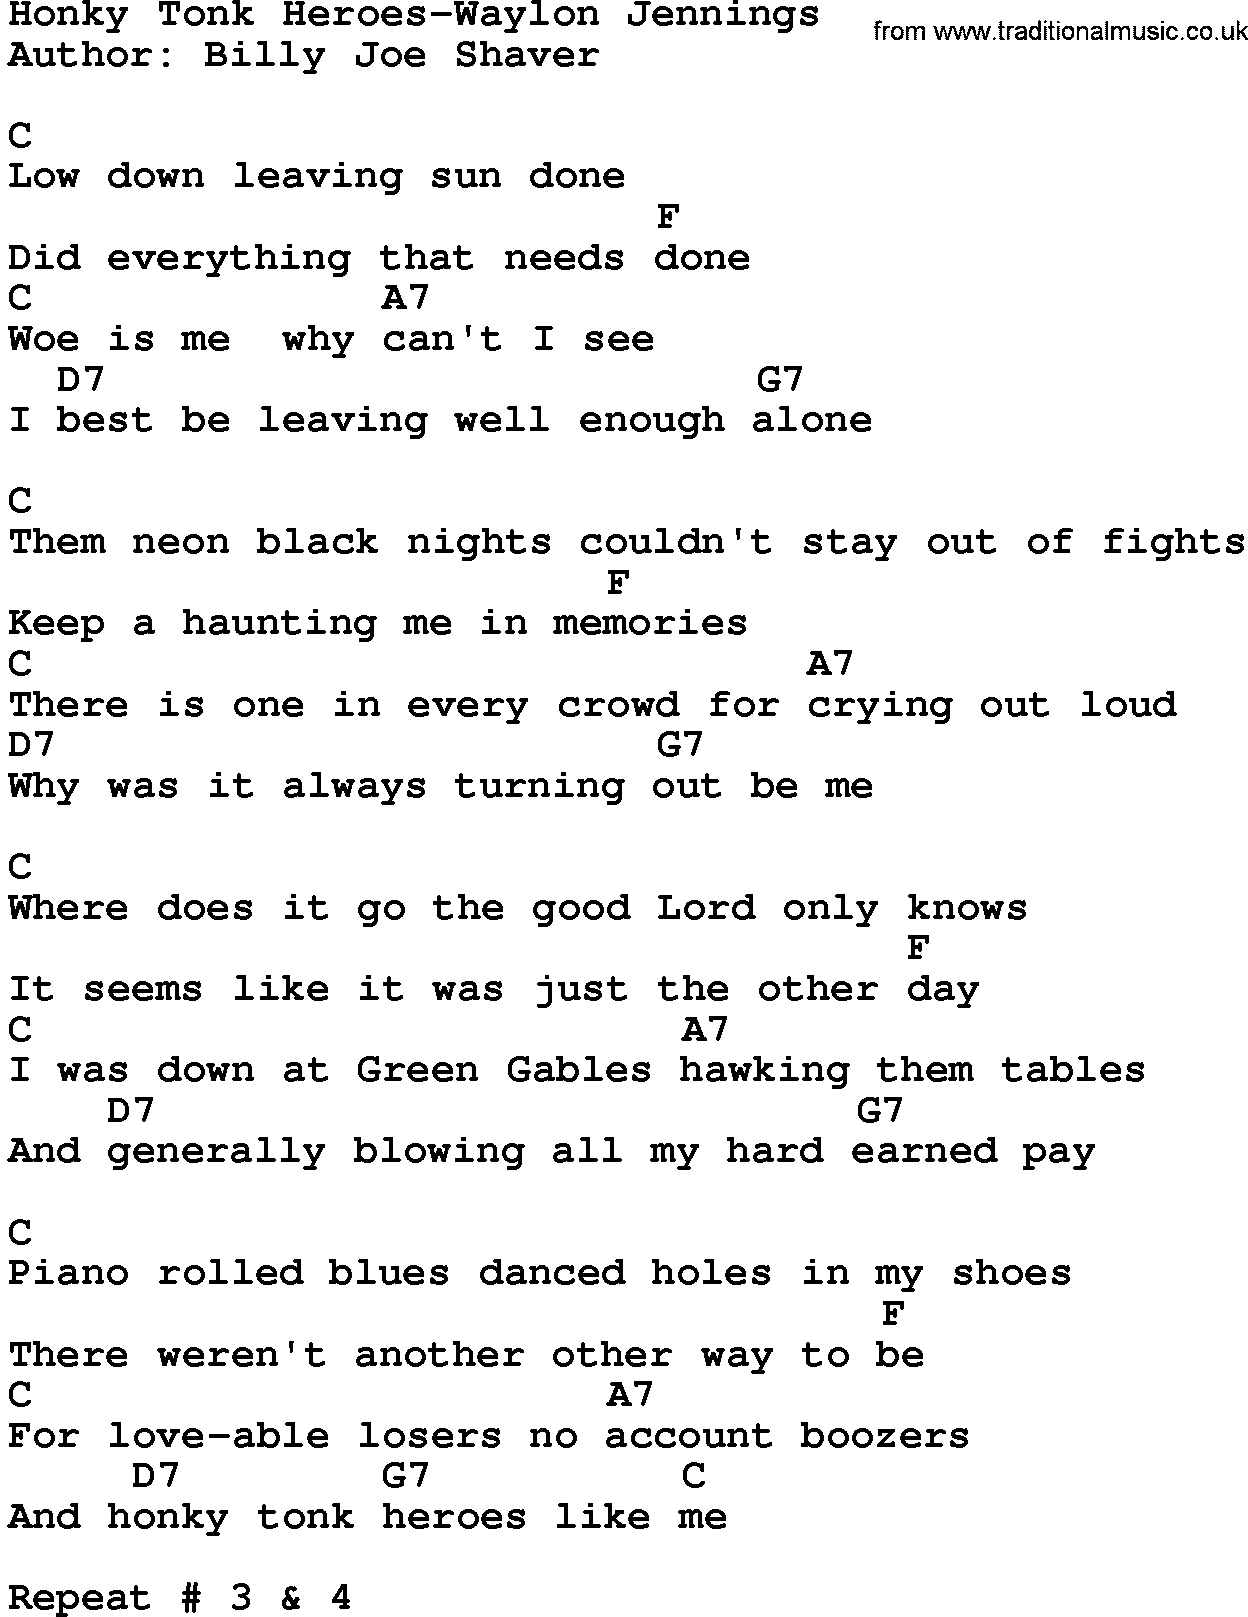 Country music song: Honky Tonk Heroes-Waylon Jennings lyrics and chords